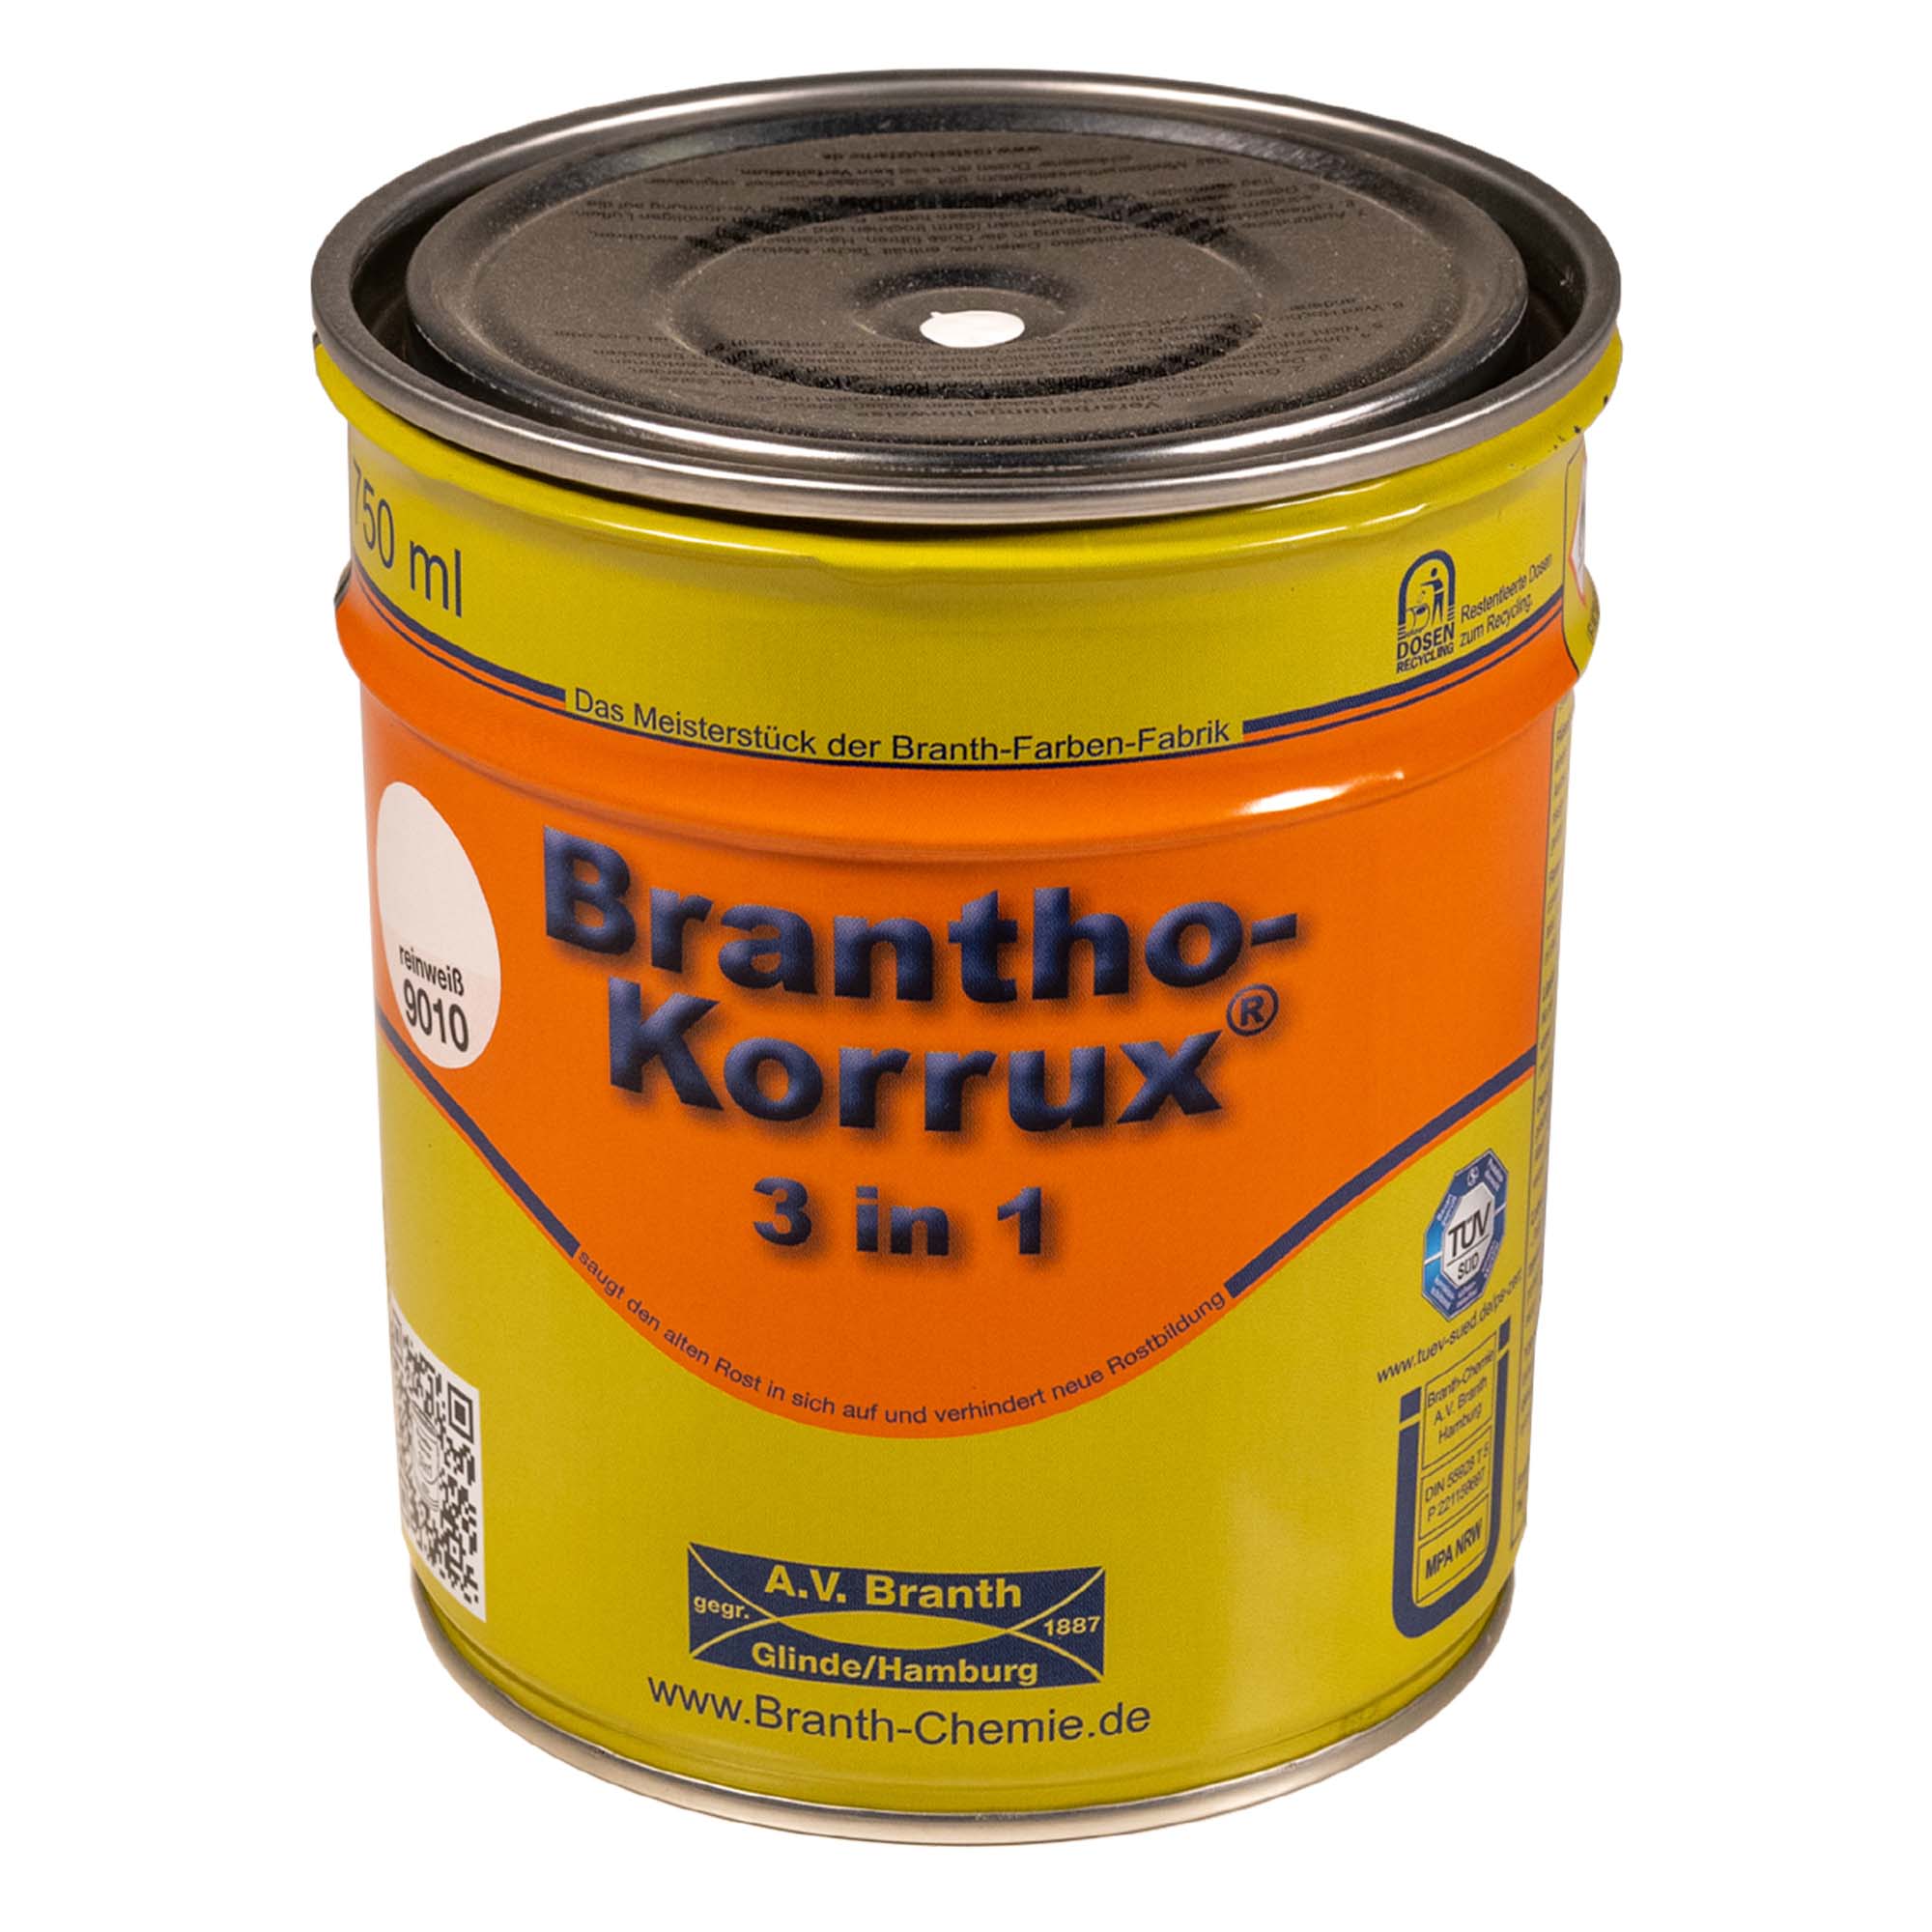 Brantho- Korrux "3 in 1" Metallschutzfarbe RAL 9010 reinweiß 0,75 l